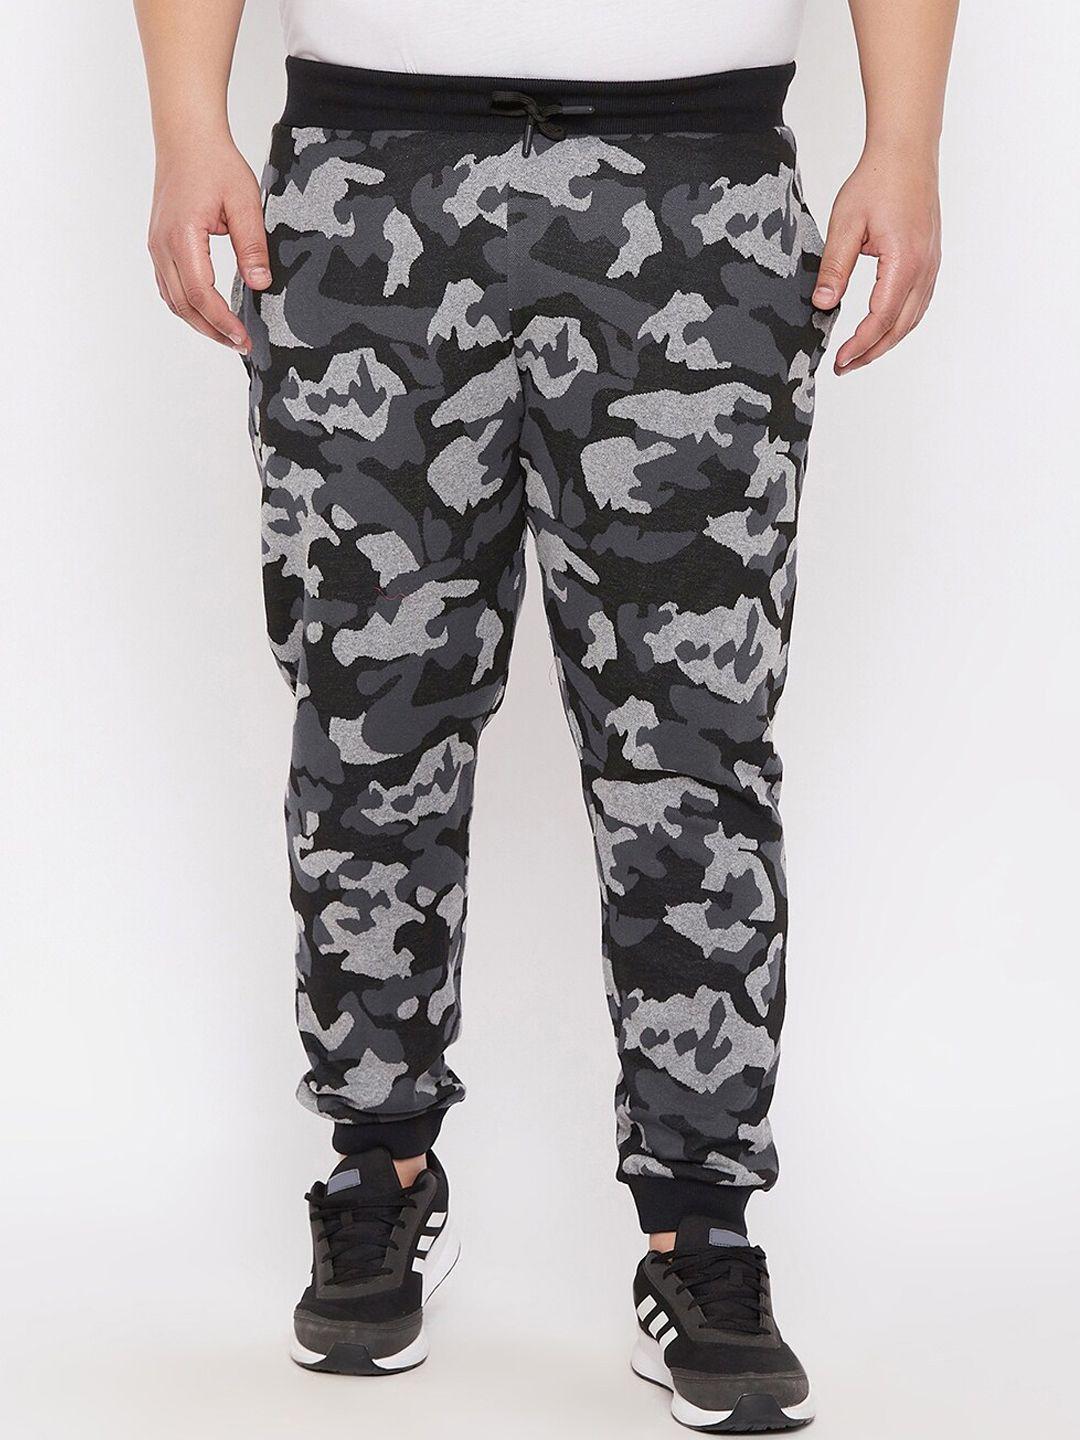 austivo-men-plus-size-grey-&-black-camouflage-printed-joggers